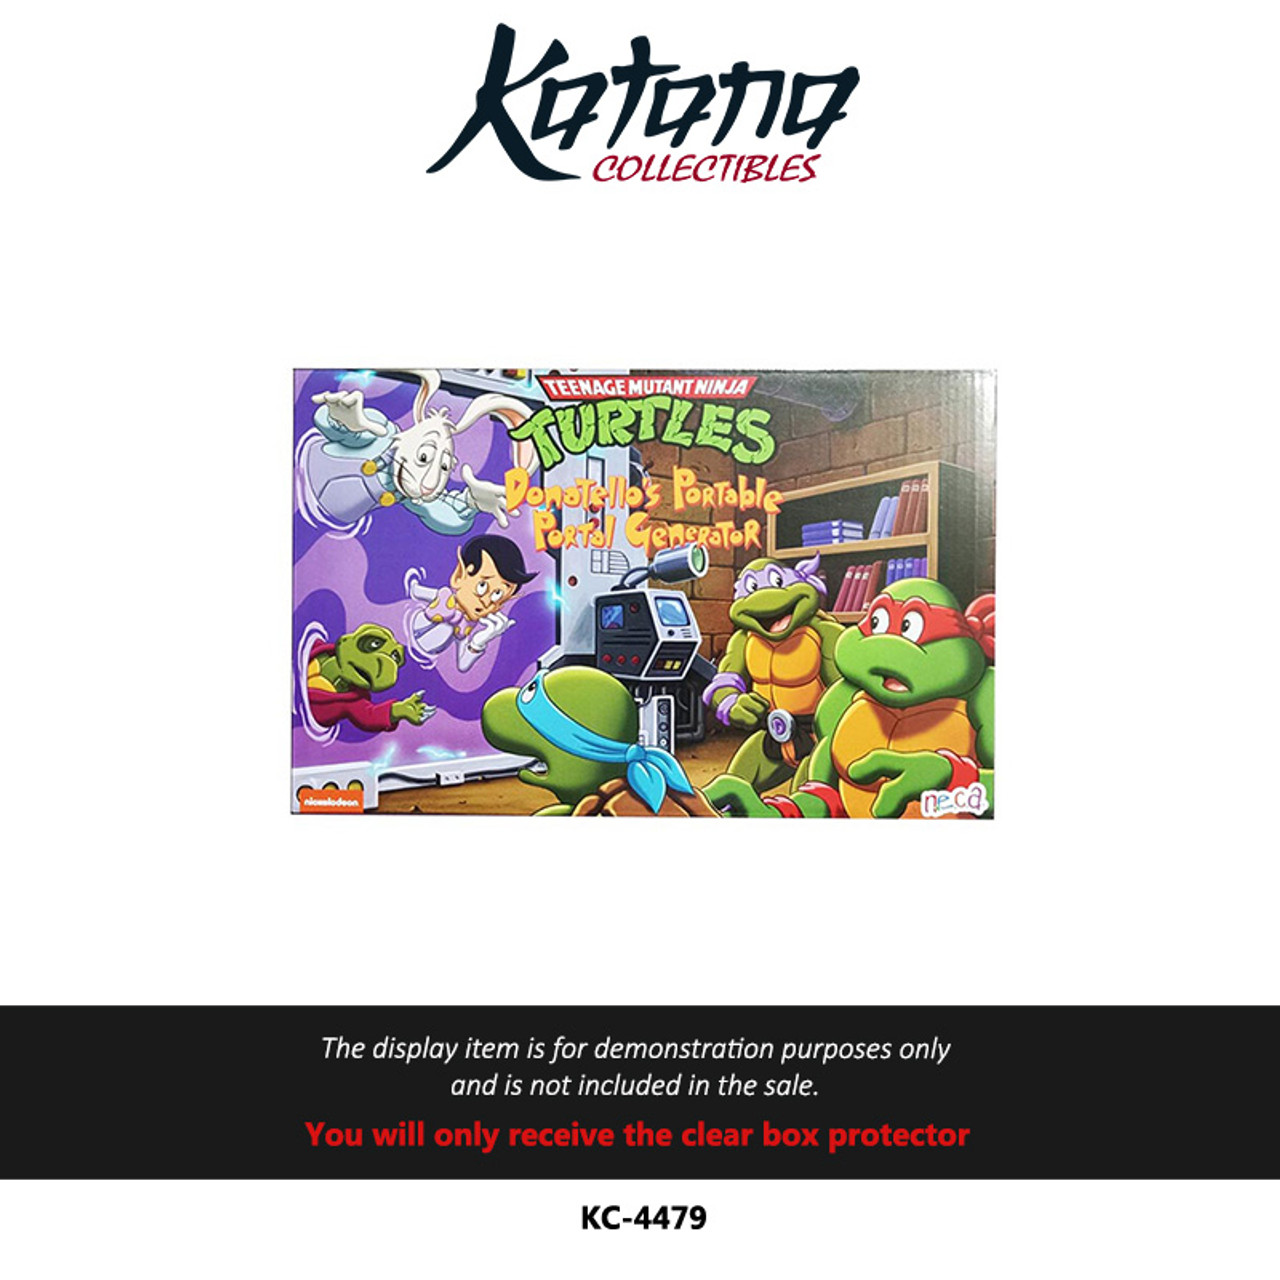 Katana Collectibles Protector For TMNT Donatellos Portable Portal Generator